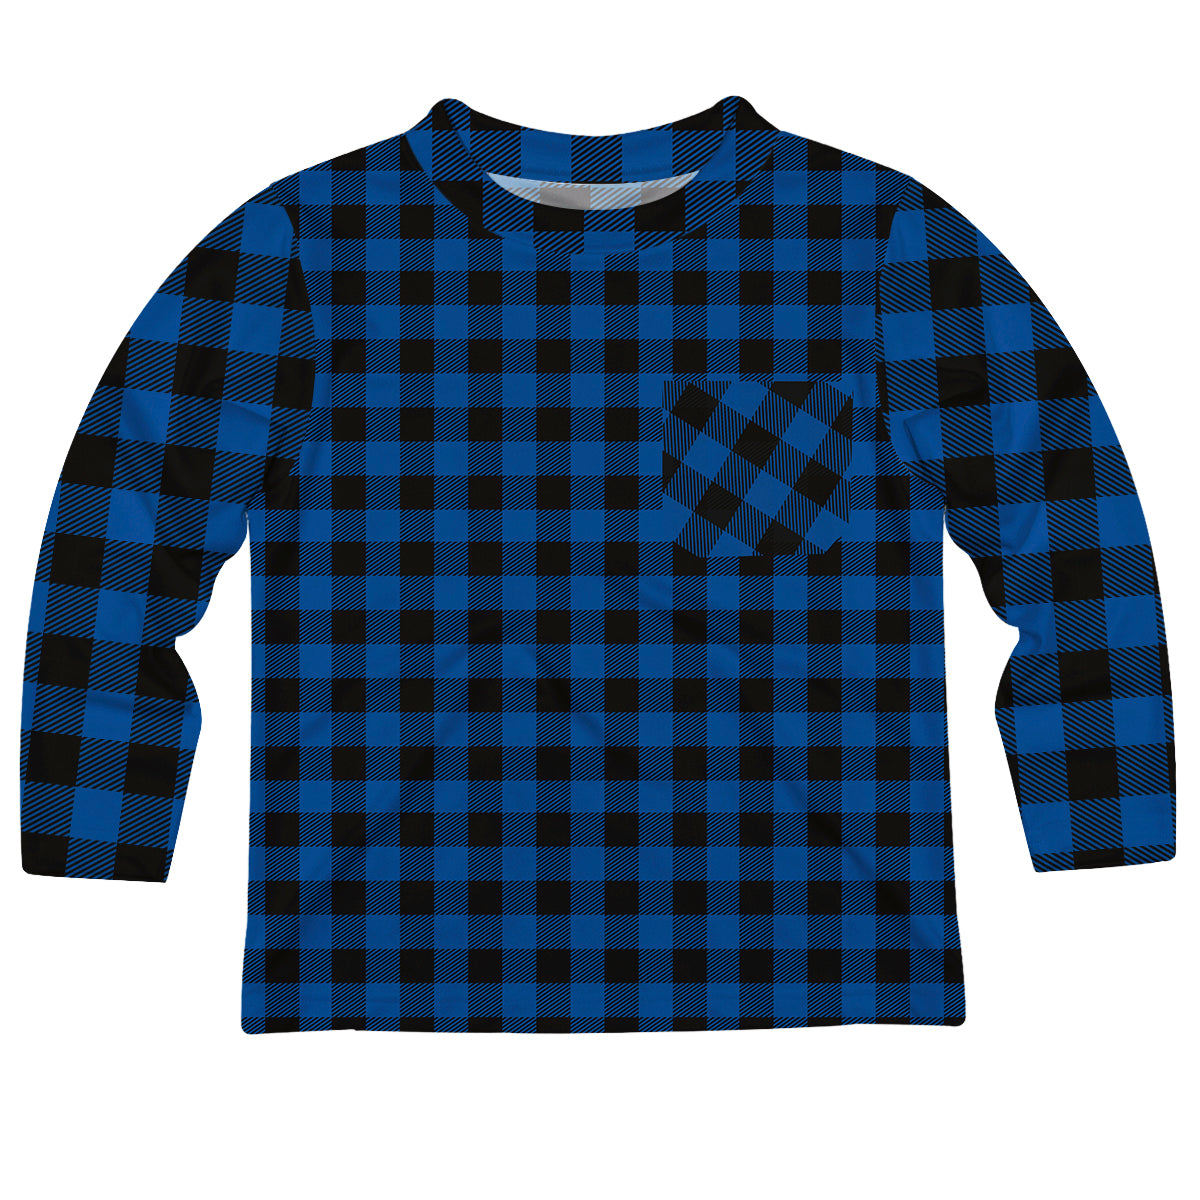 Boys black and blue buffalo plaid long sleeve tee shirt - Wimziy&Co.